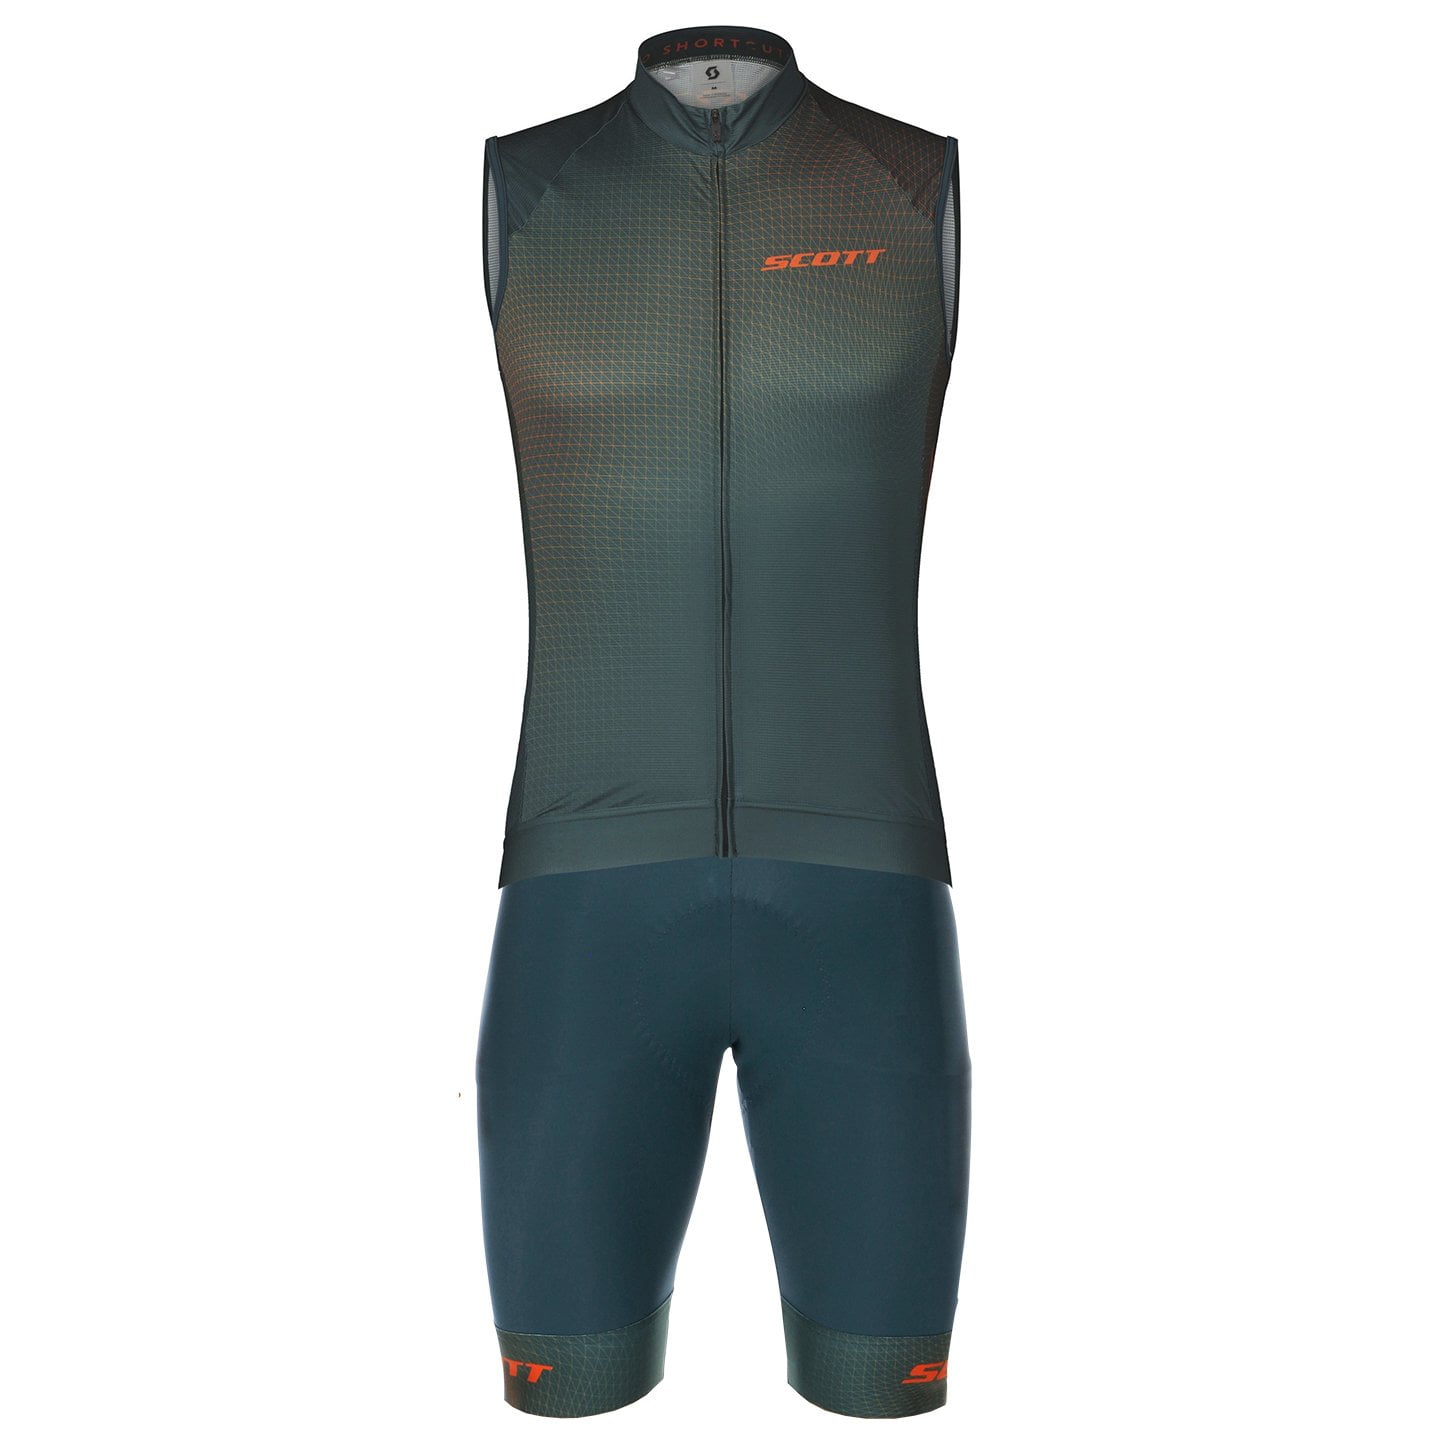 SCOTT Sleeveless RC Pro Set (cycling jersey + cycling shorts) Set (2 pieces), for men